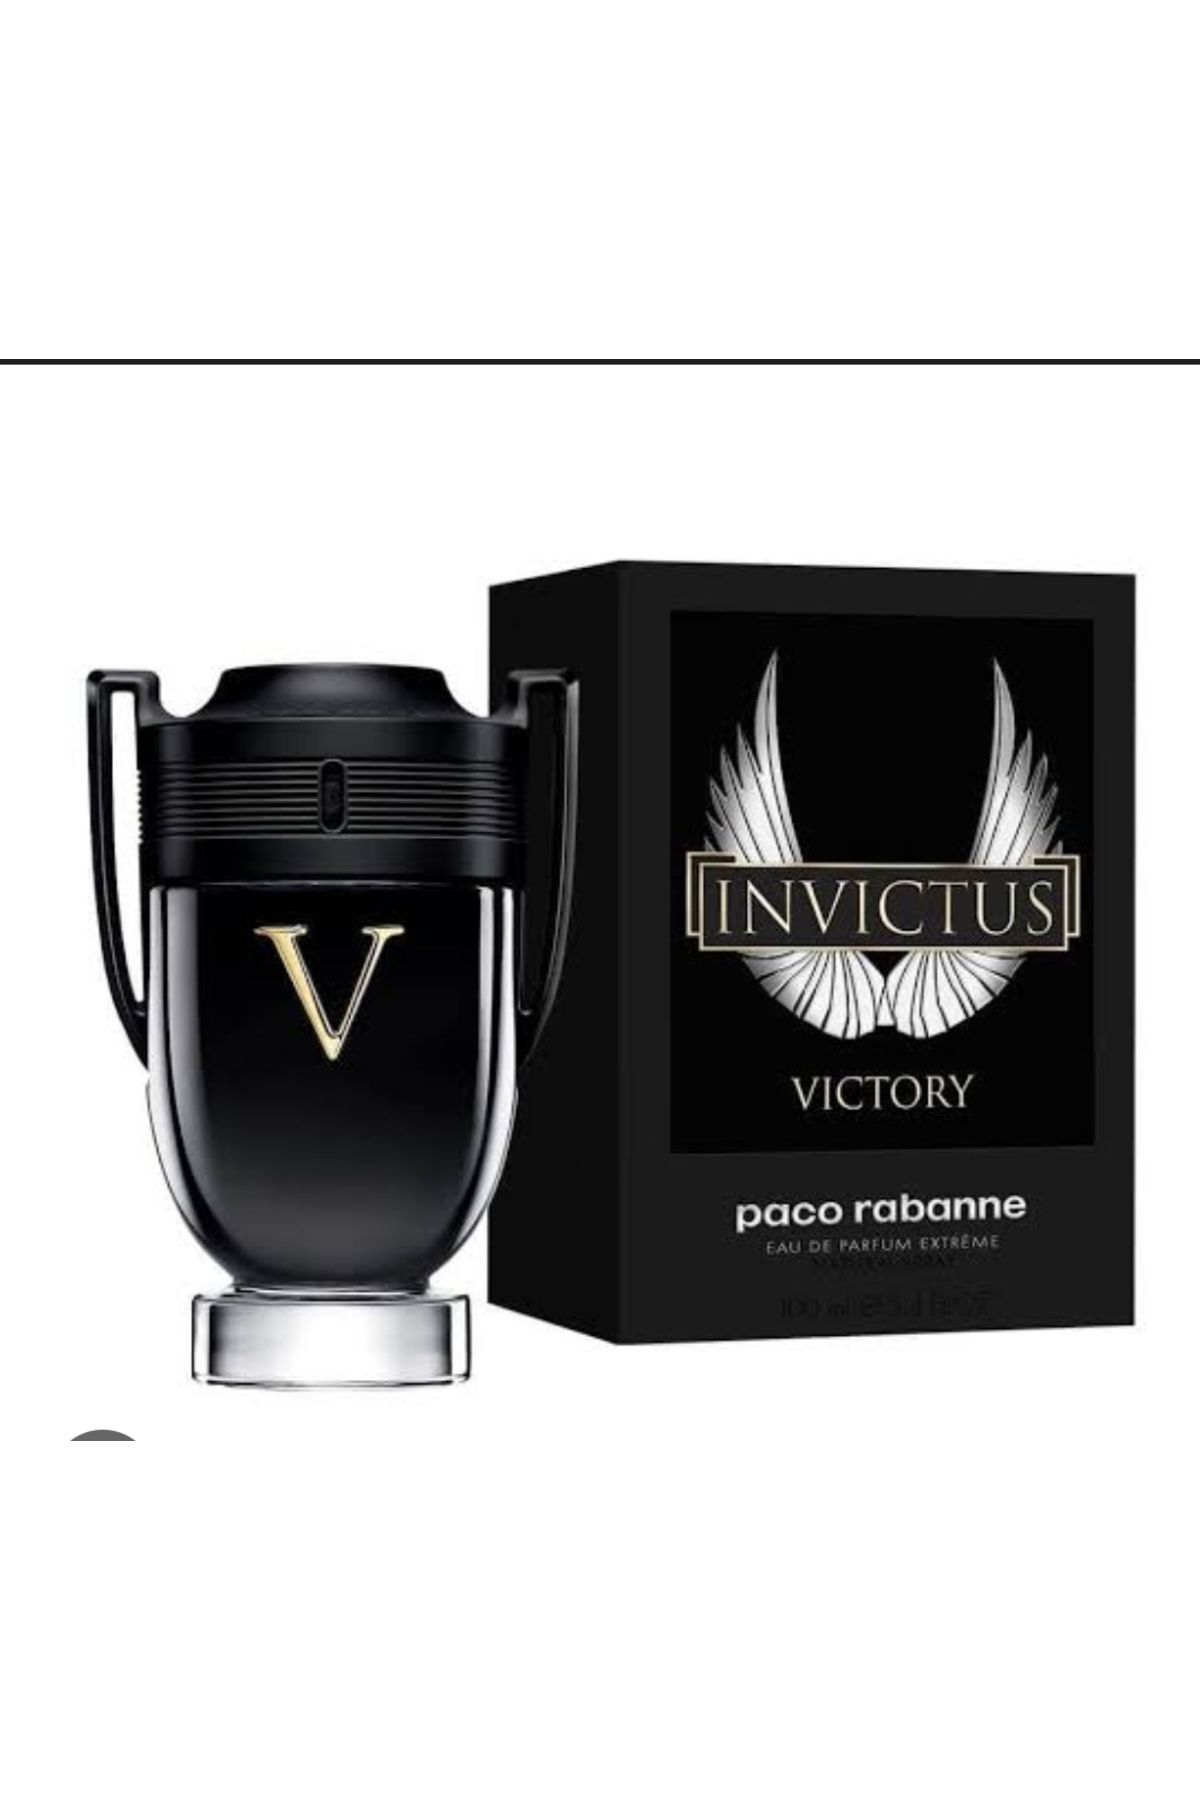 İNVİCTUS Paco Rabanne Victory Extreme 100 ml Erkek Parfüm Fiyatı ...